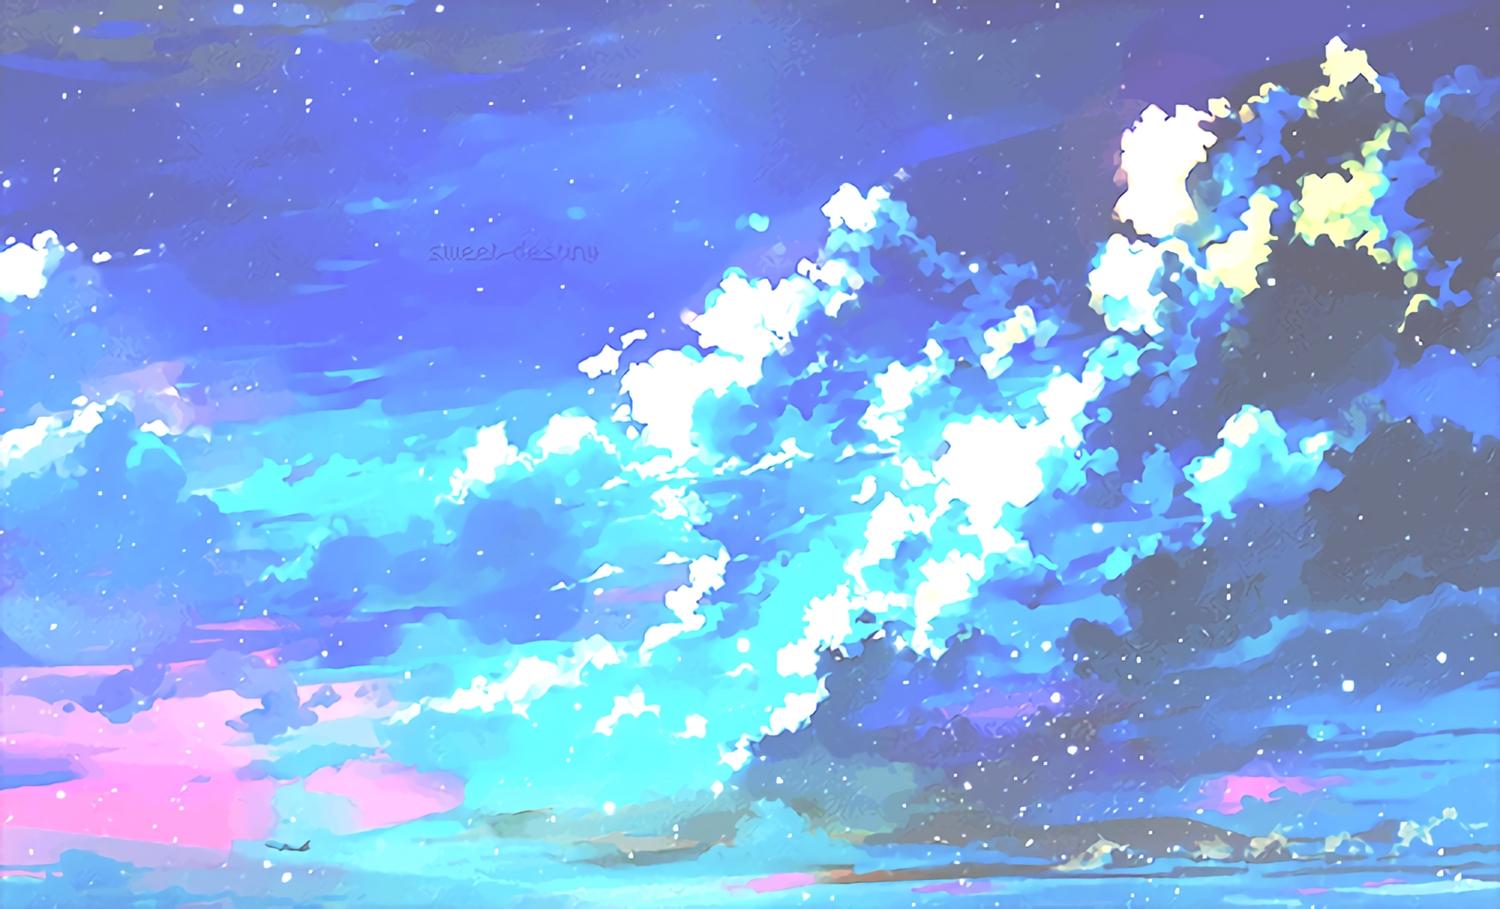 theme anime: Aesthetic Anime Background Scenery